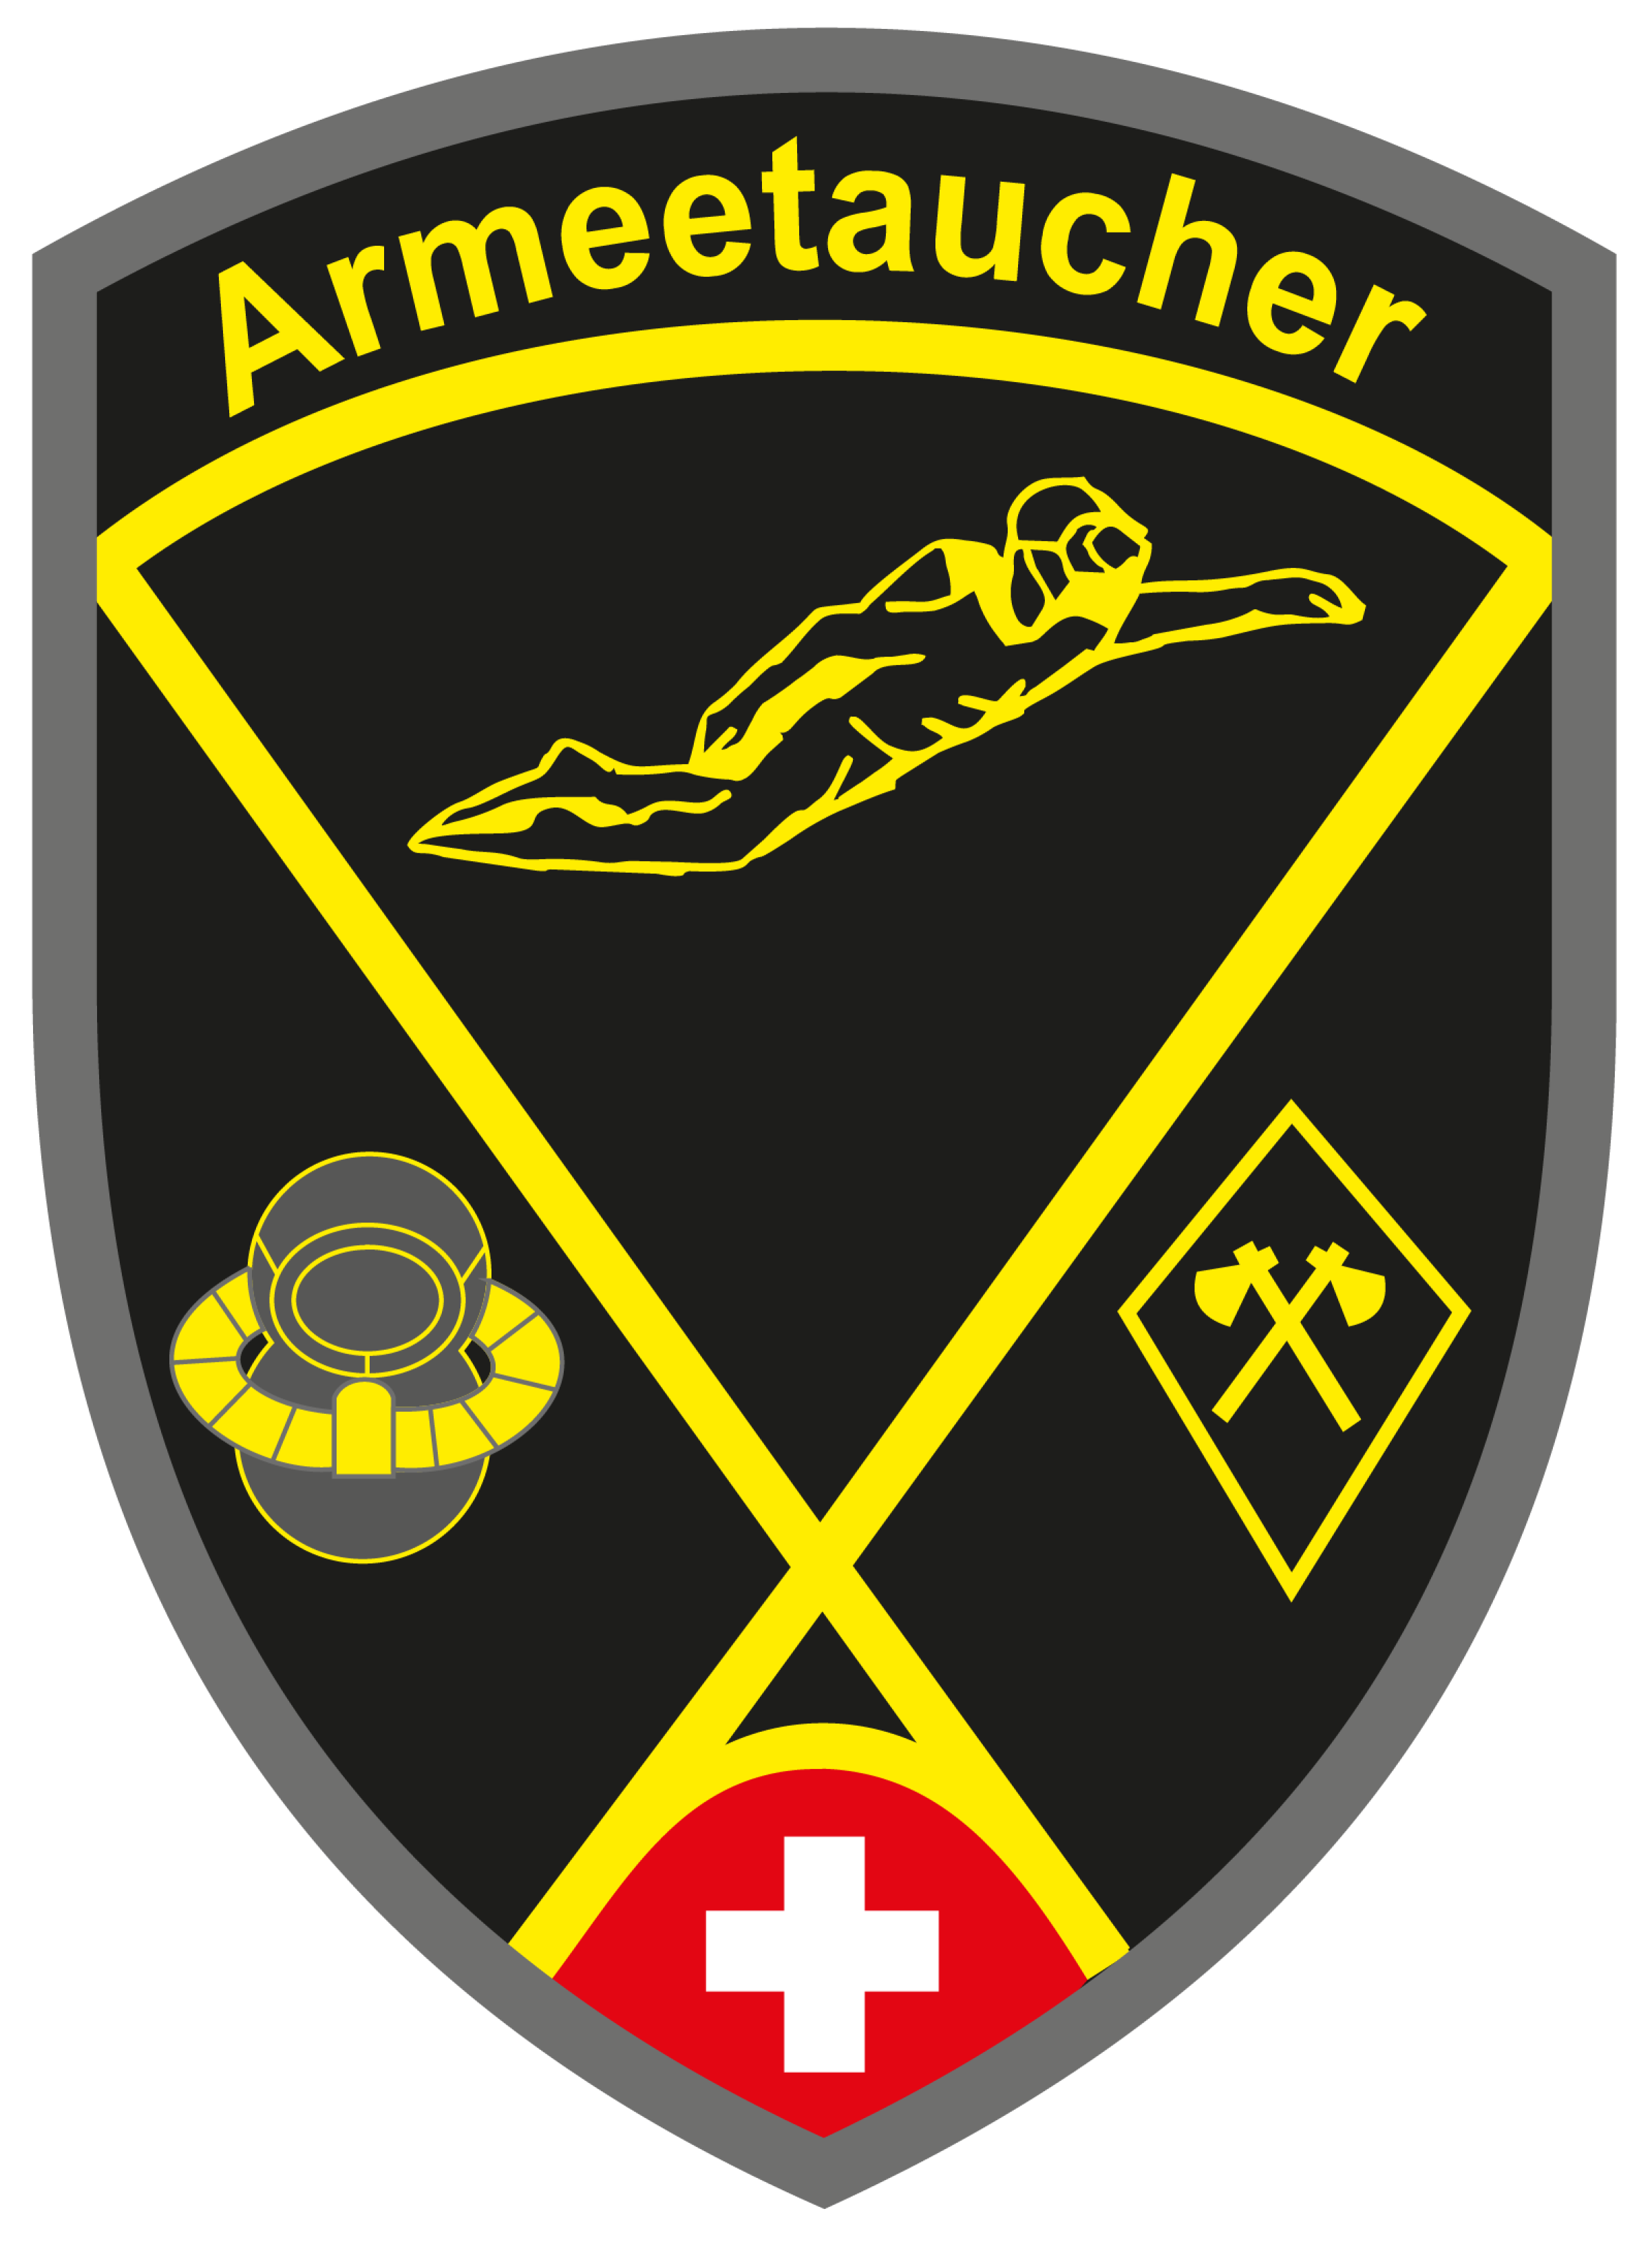 Emblem der Armeetaucher ab 2022